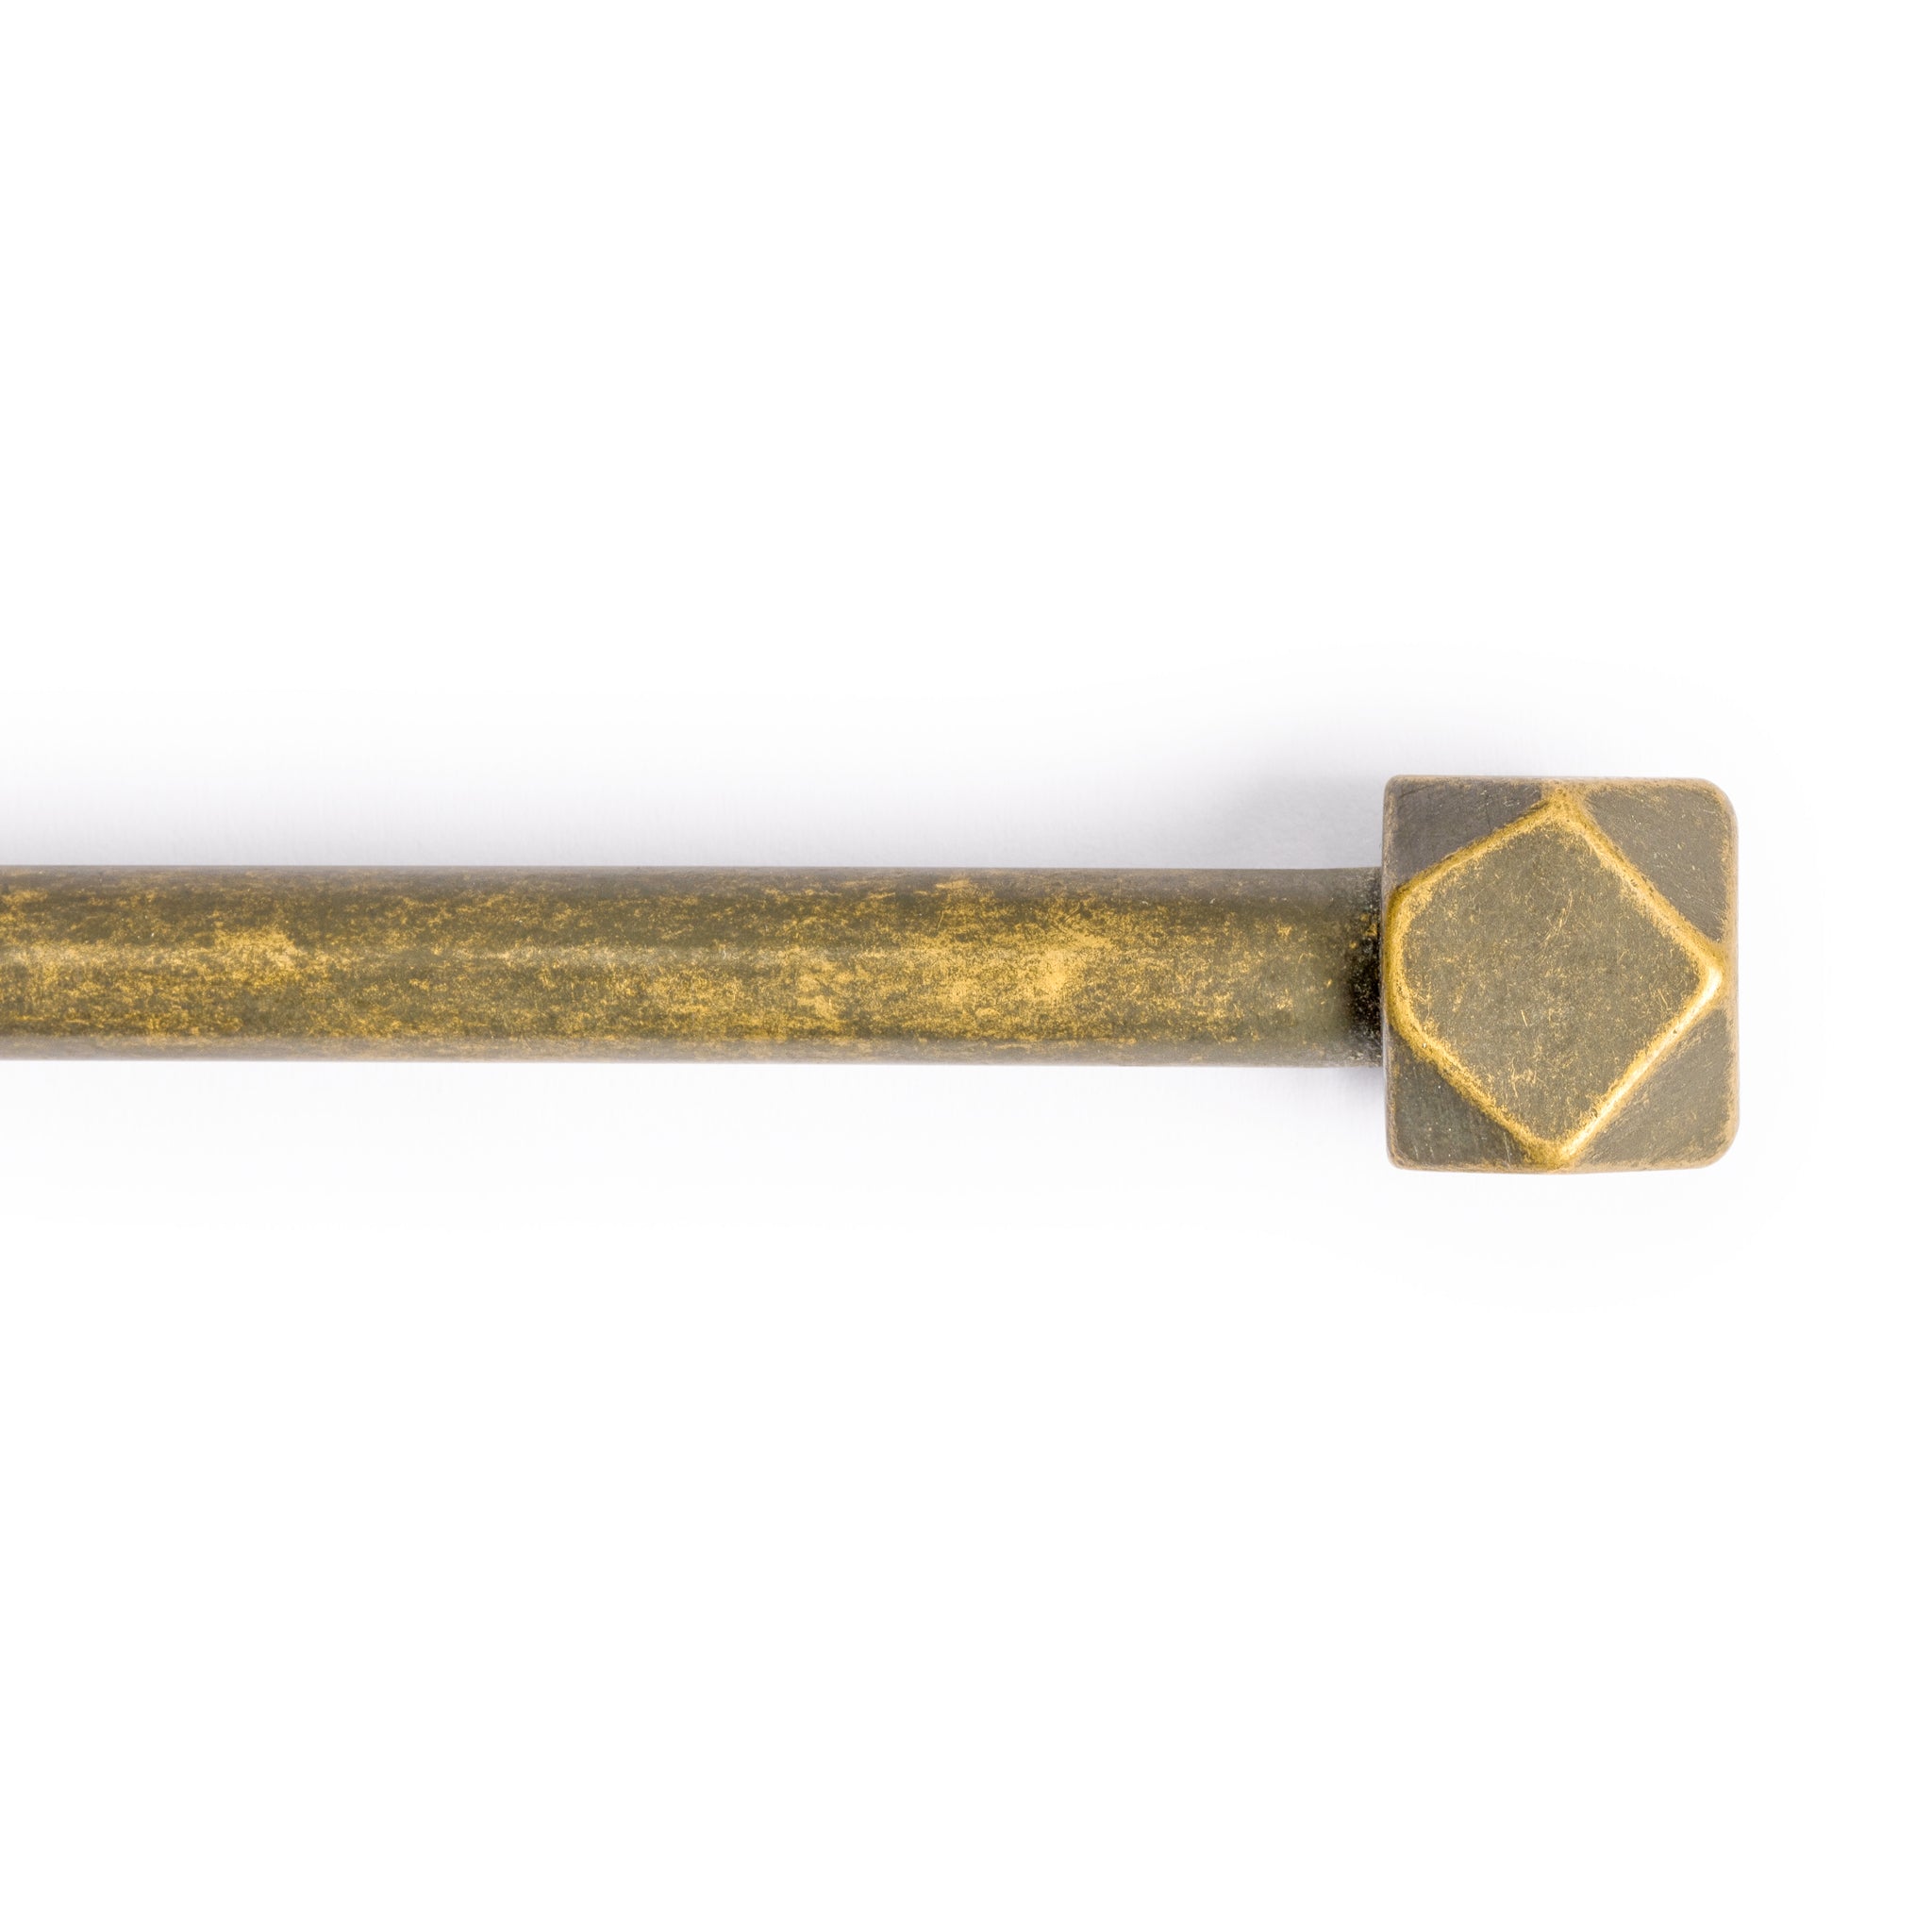 14 Sided Key Pins 6" Set of 2-Chinese Brass Hardware